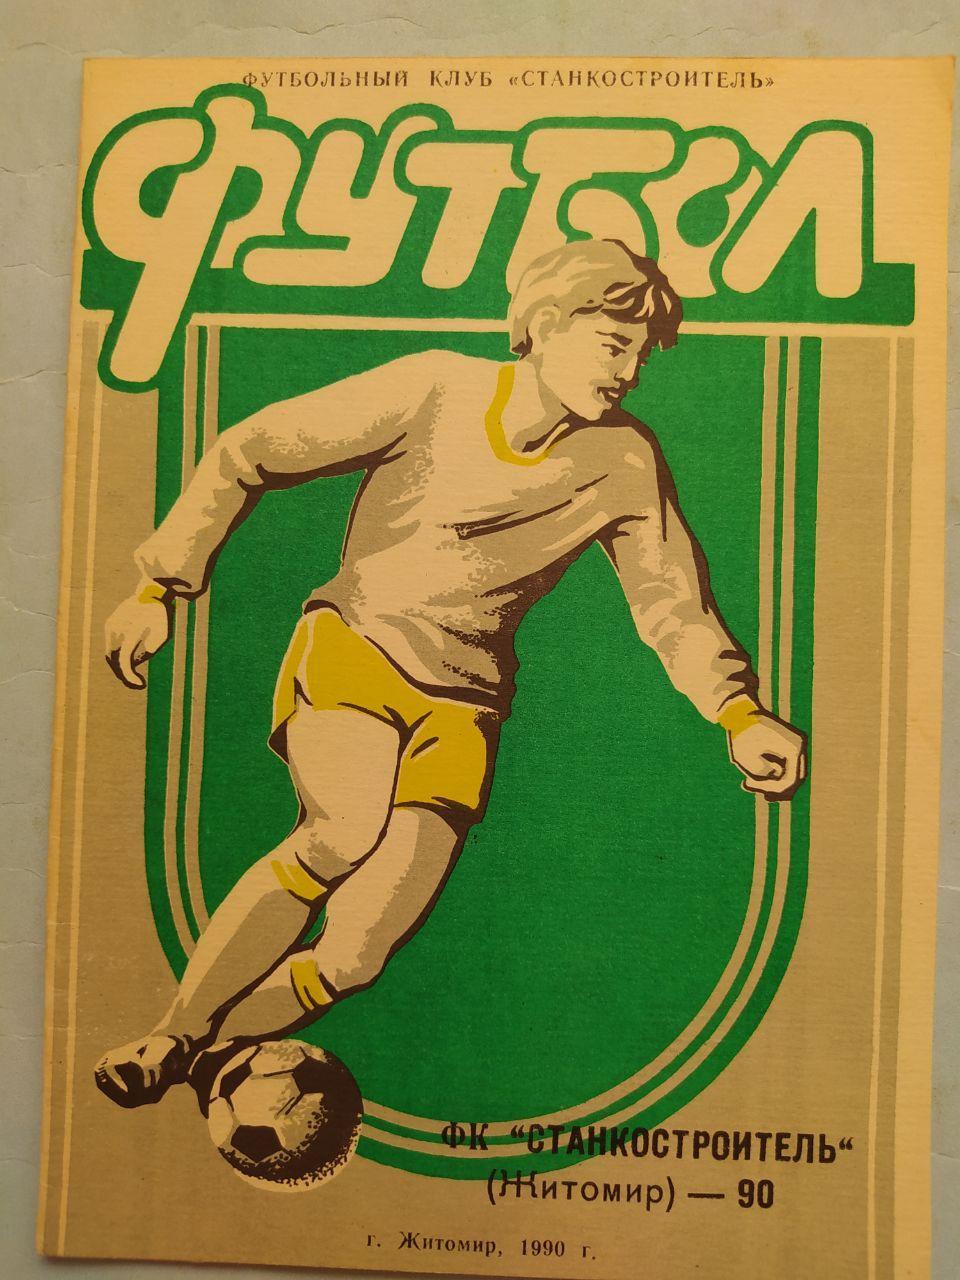 Программа соревнований по футболу Станкостроитель Житомир 1989 г.